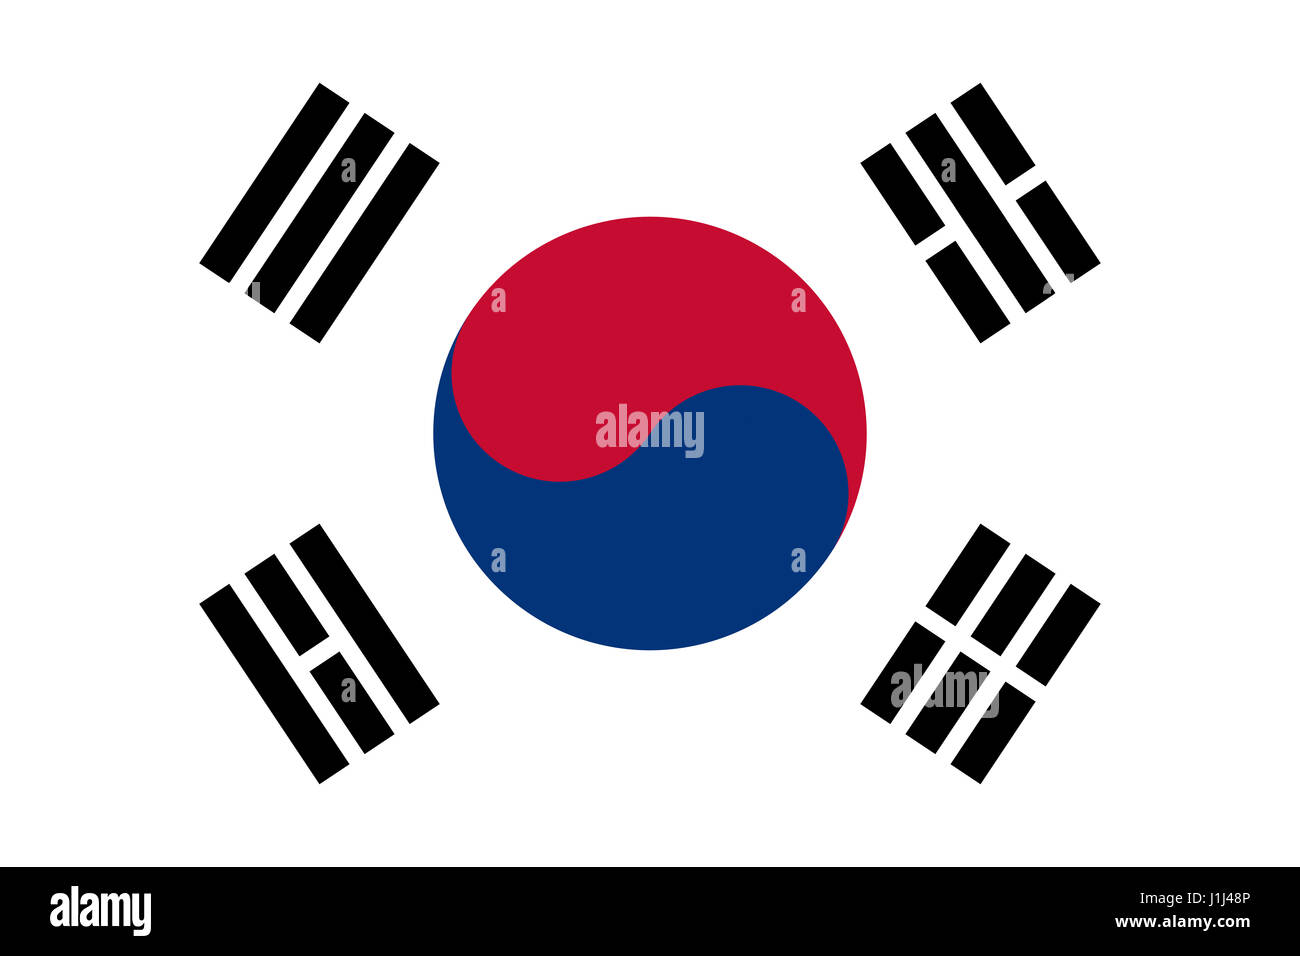 Illustration of the flag of South Korea Stock Photo